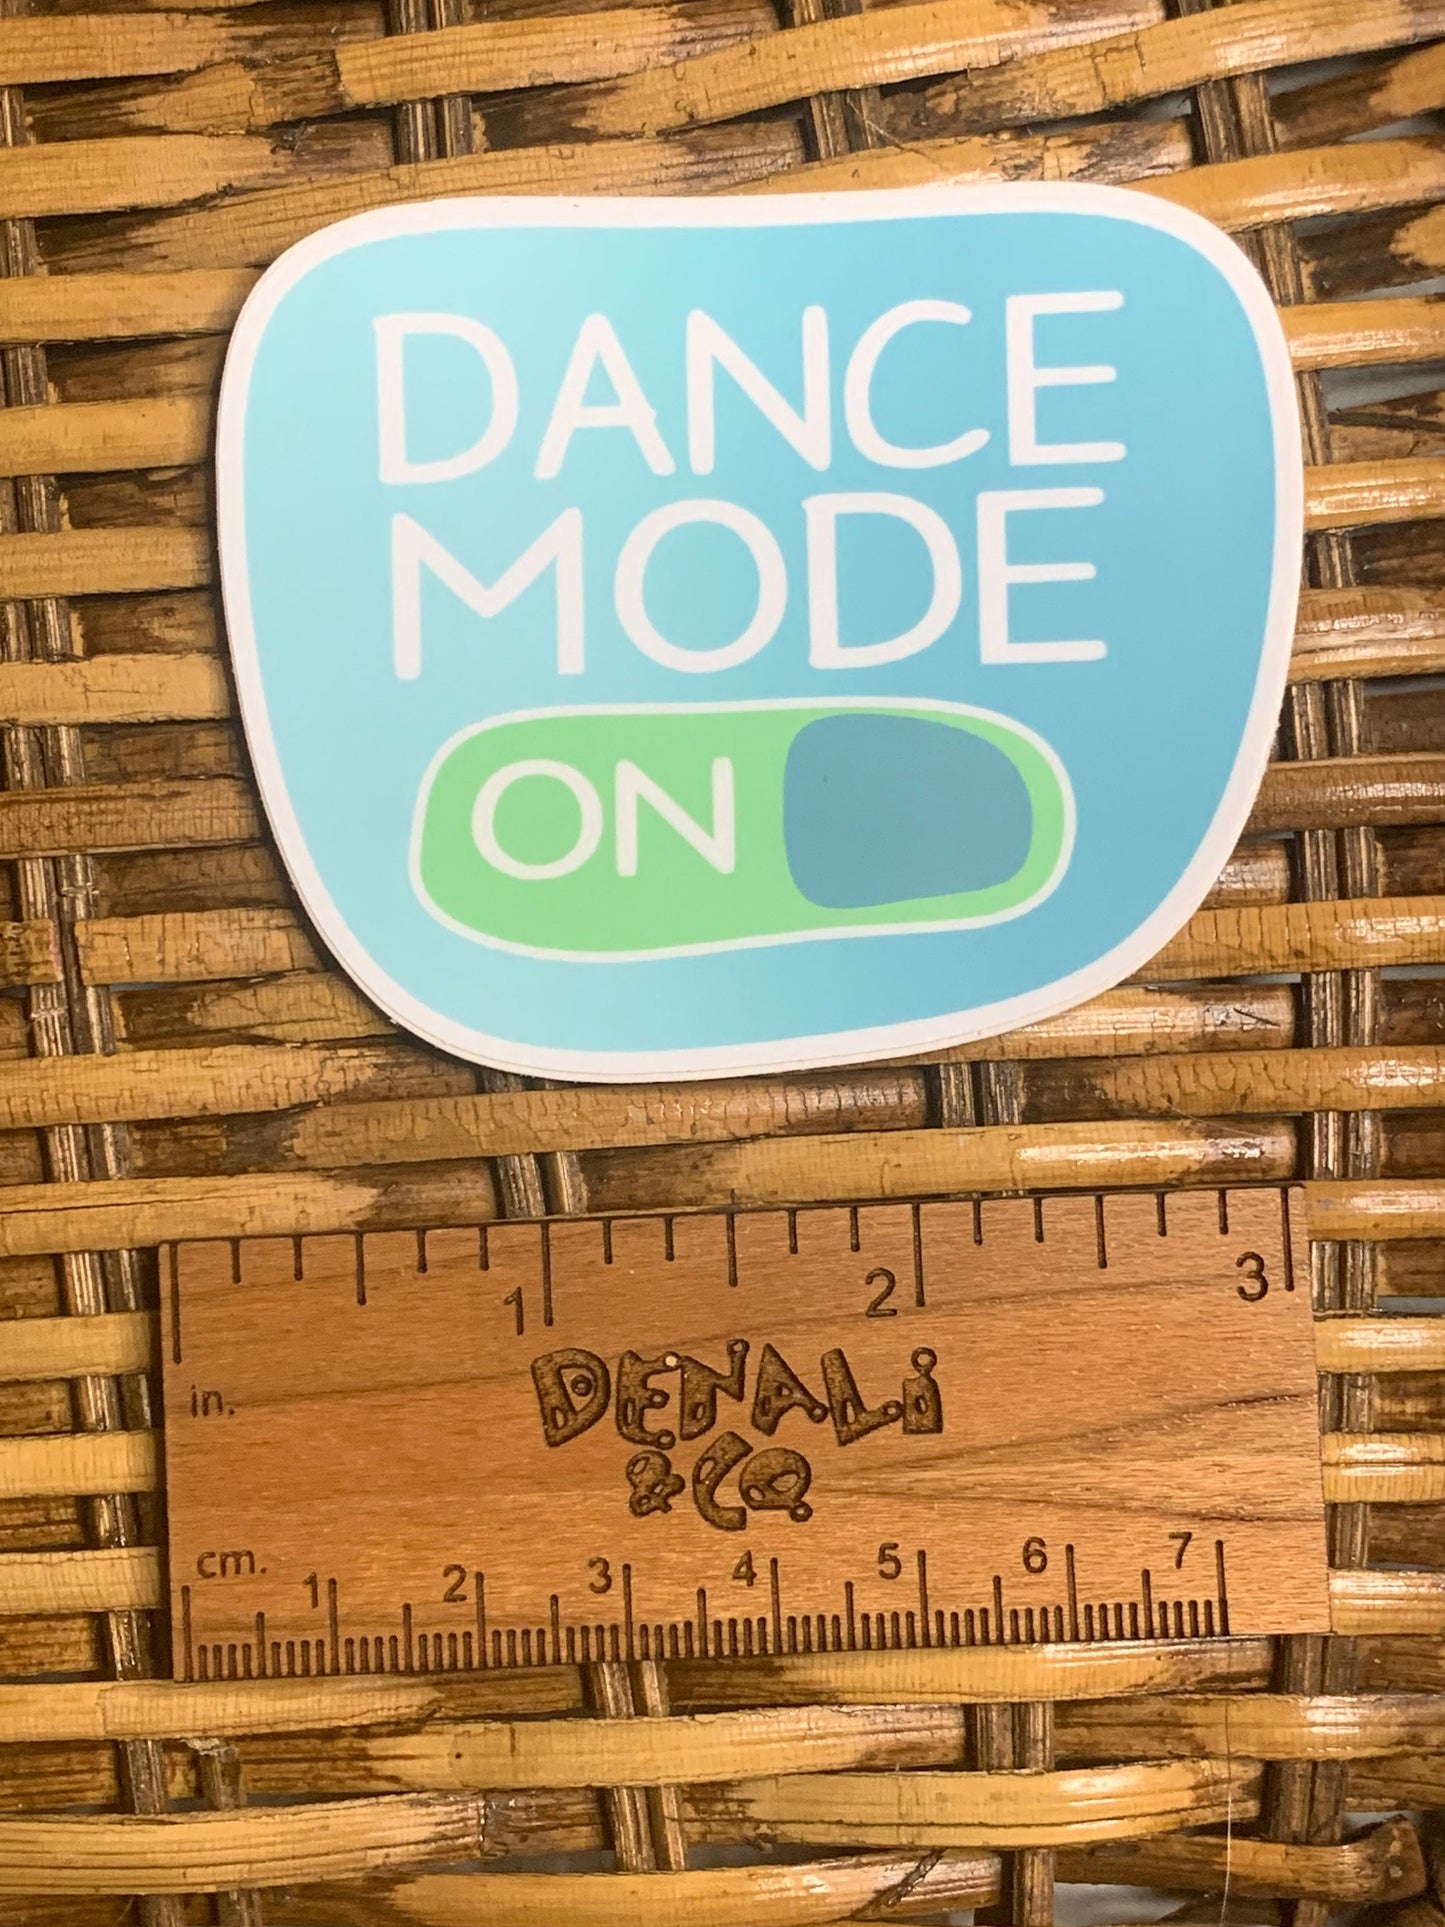 Dance Mode On Vinyl Sticker, Vinyl Decal, Laptop Sticker, Dance Sticker, Gifts For Dancers, Ballet Gifts